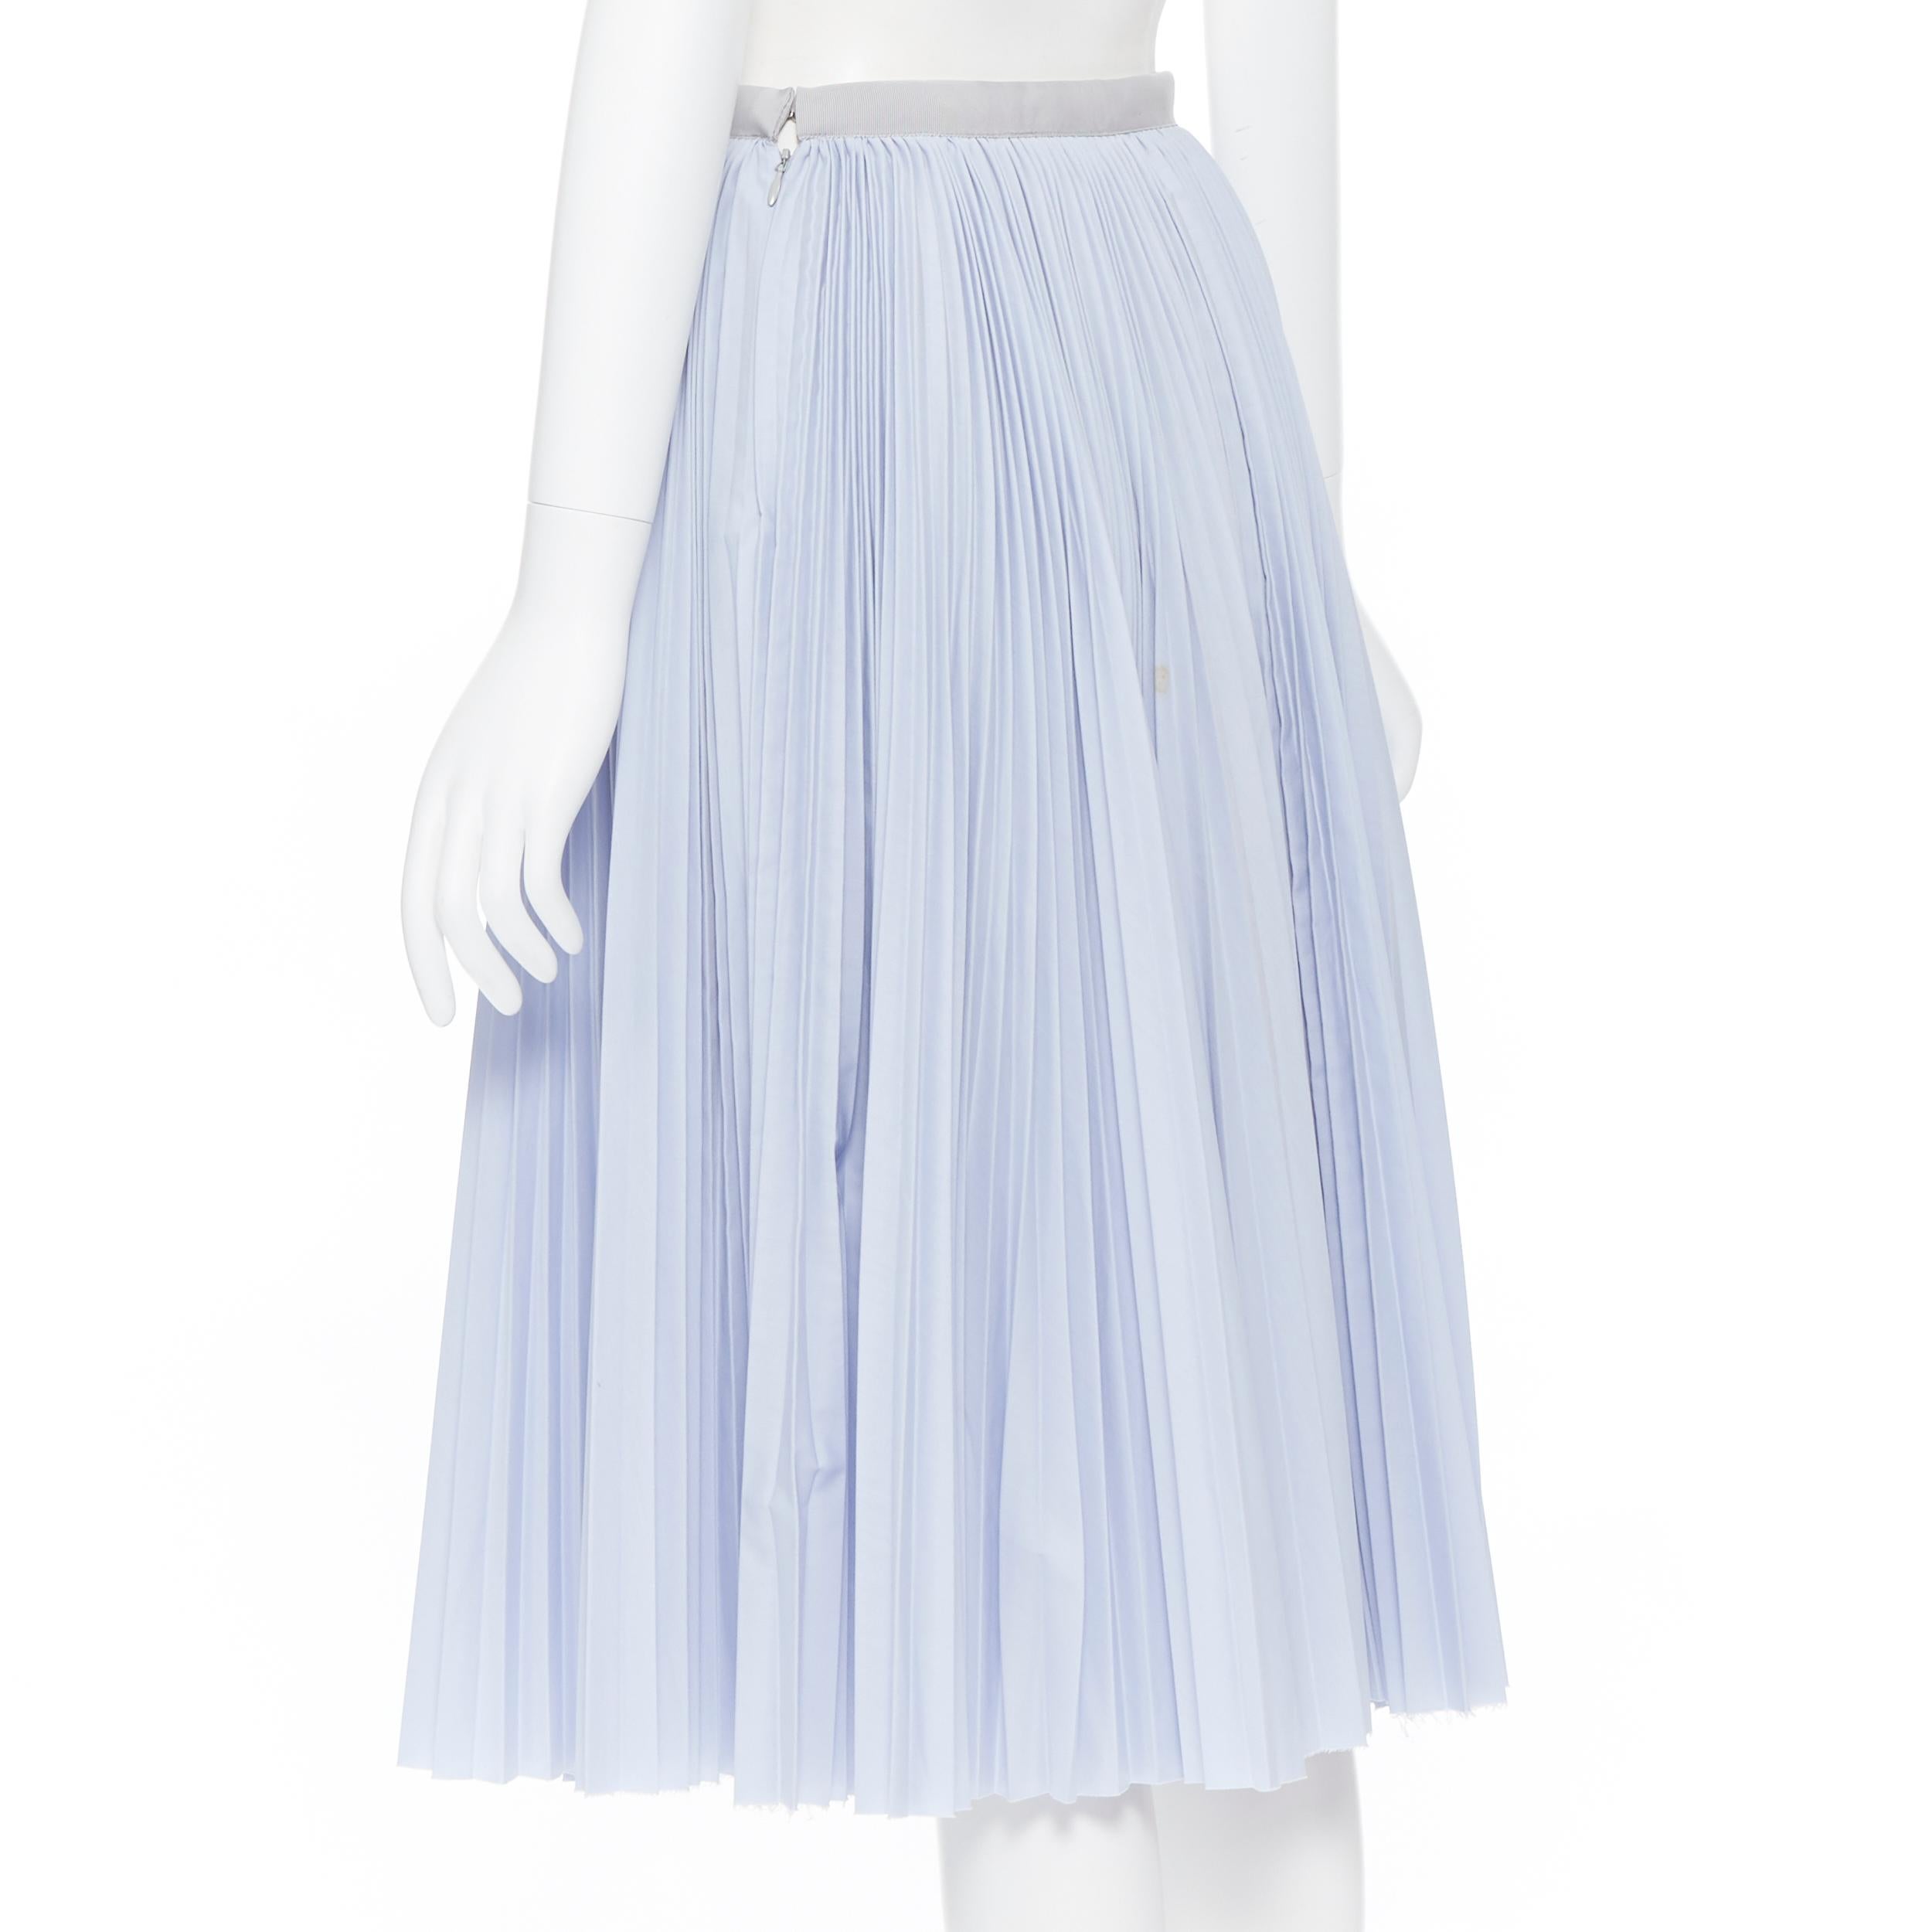 SACAI LUCK grey lace trim skirt blue cotton pleated high slit knee skirt JP1 24